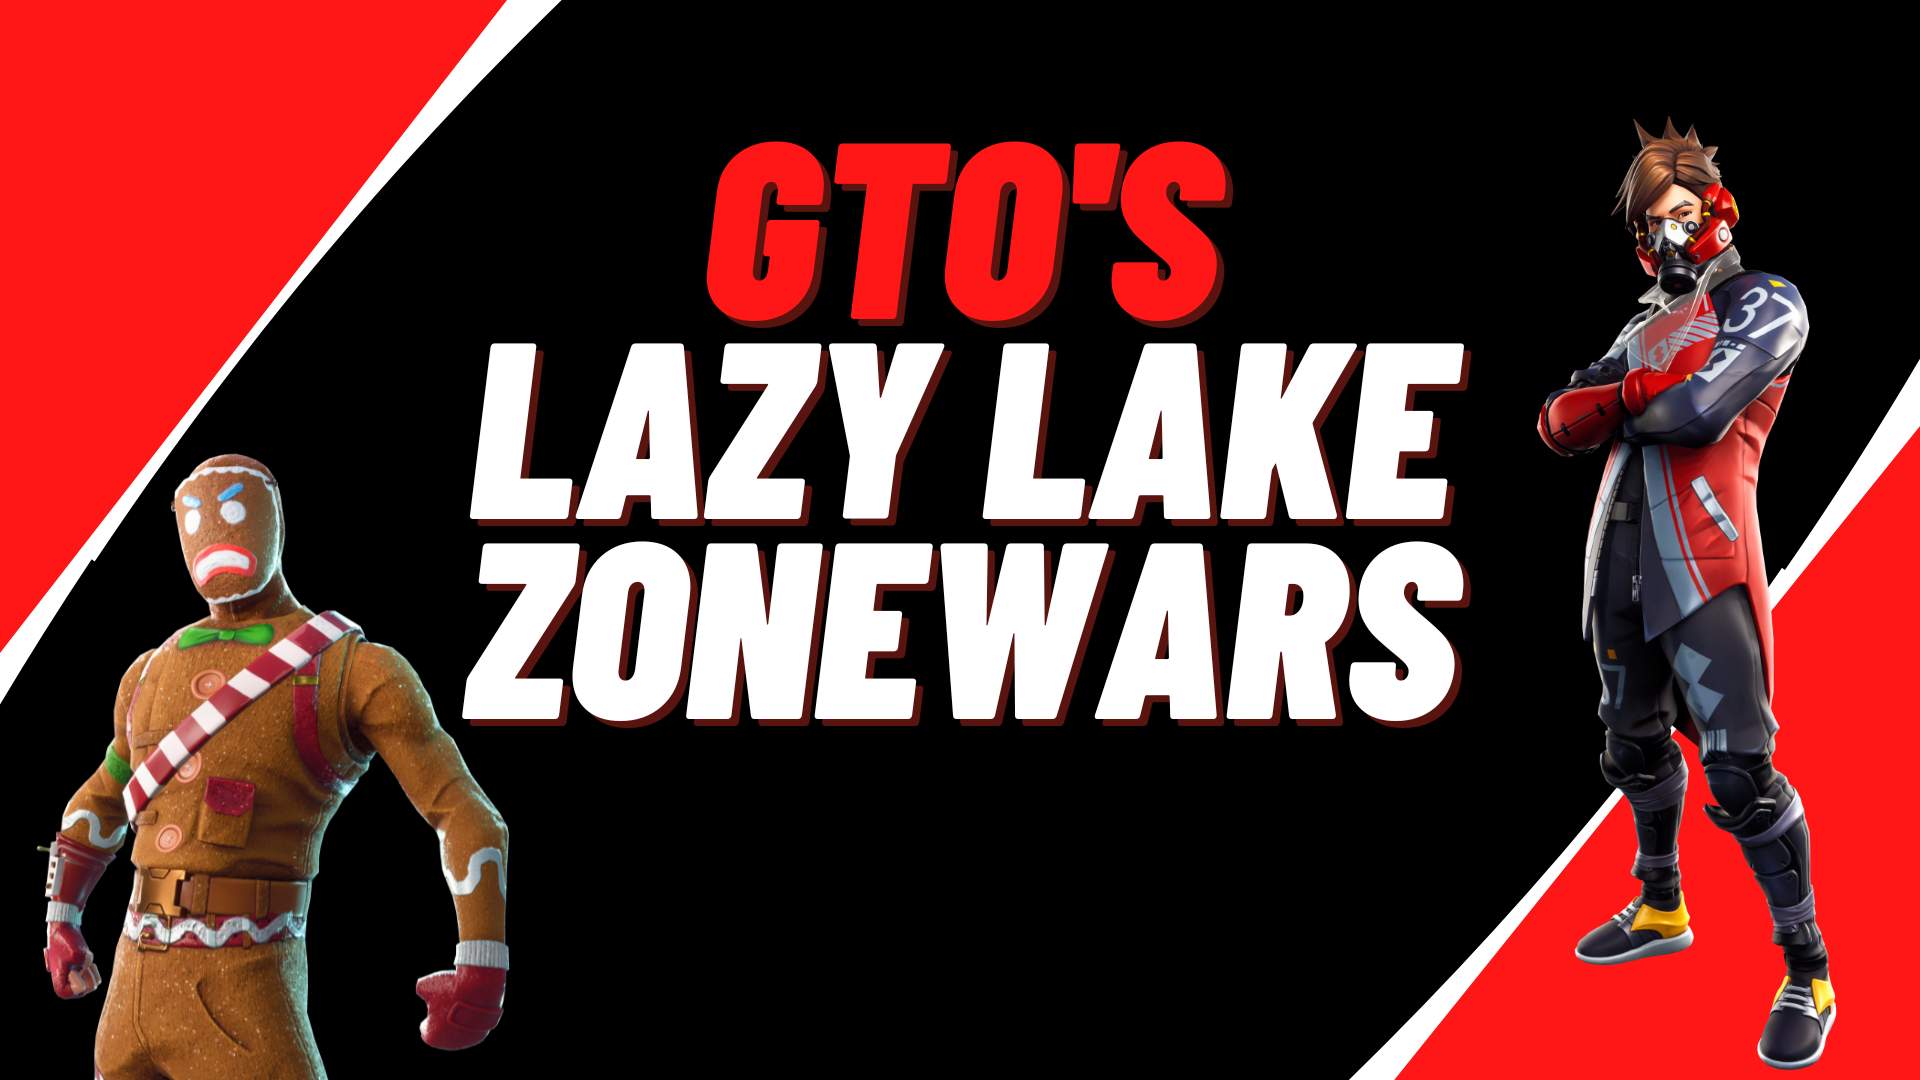 GTO'S LAZY LAKE ZONEWARS